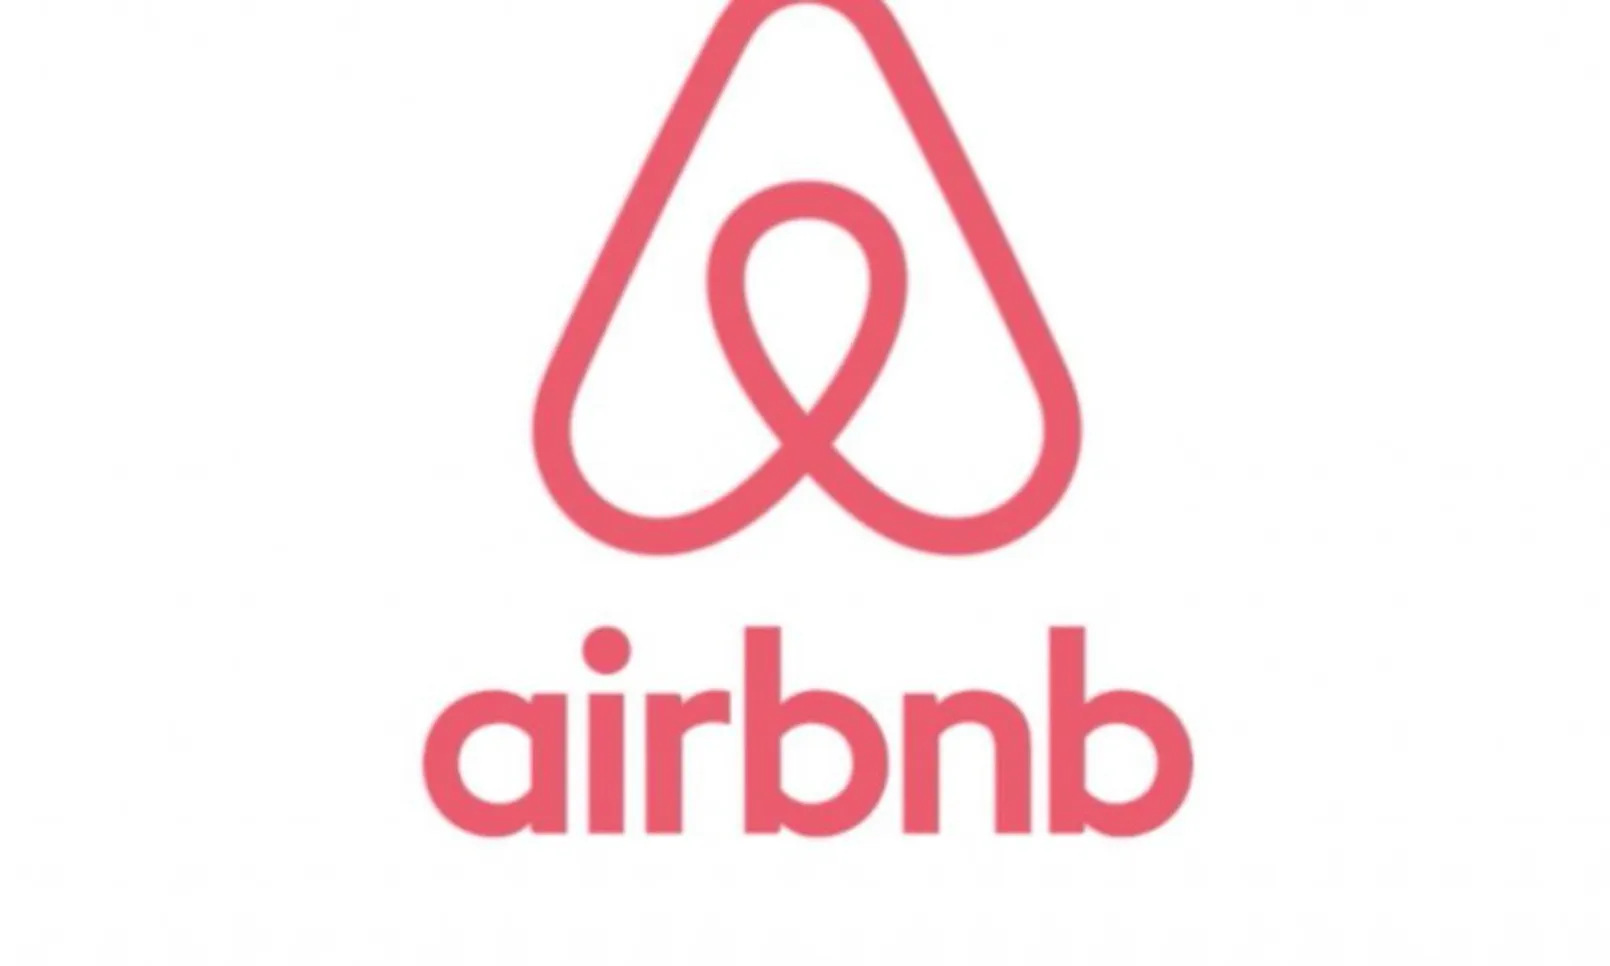 Airbnb New Logo 1 1024x863 1000x600 1.jpg